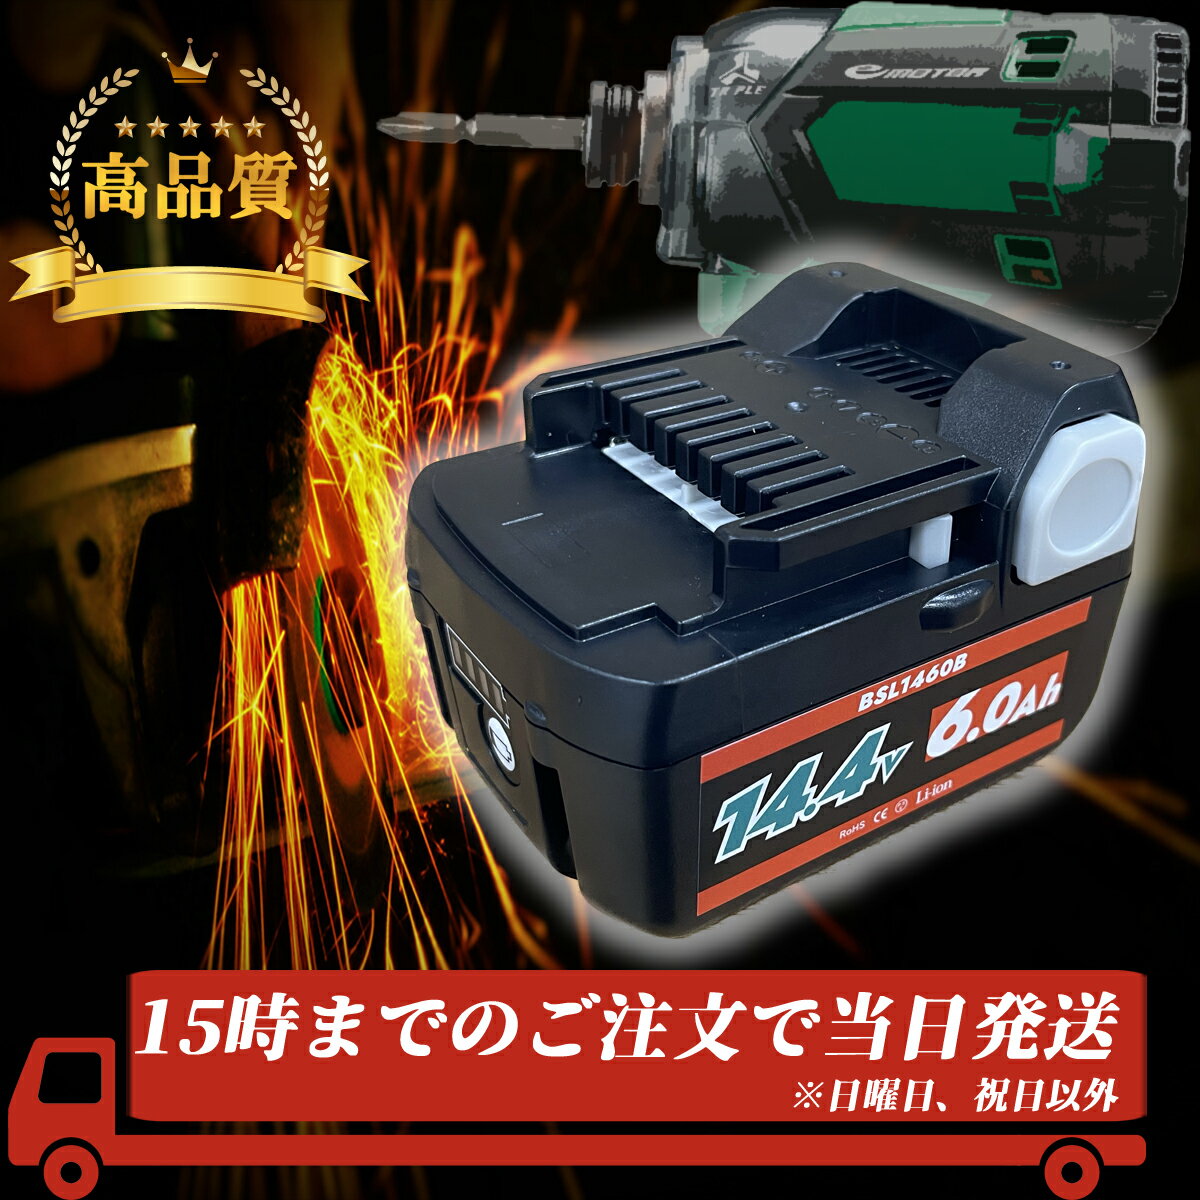 HITACHI 14.4V 大容量 6.0Ah 互換 バッテリー BSL1460B 日立 HiKOKI ハイコーキ 電動工具 残量表示付き 1年保証付き